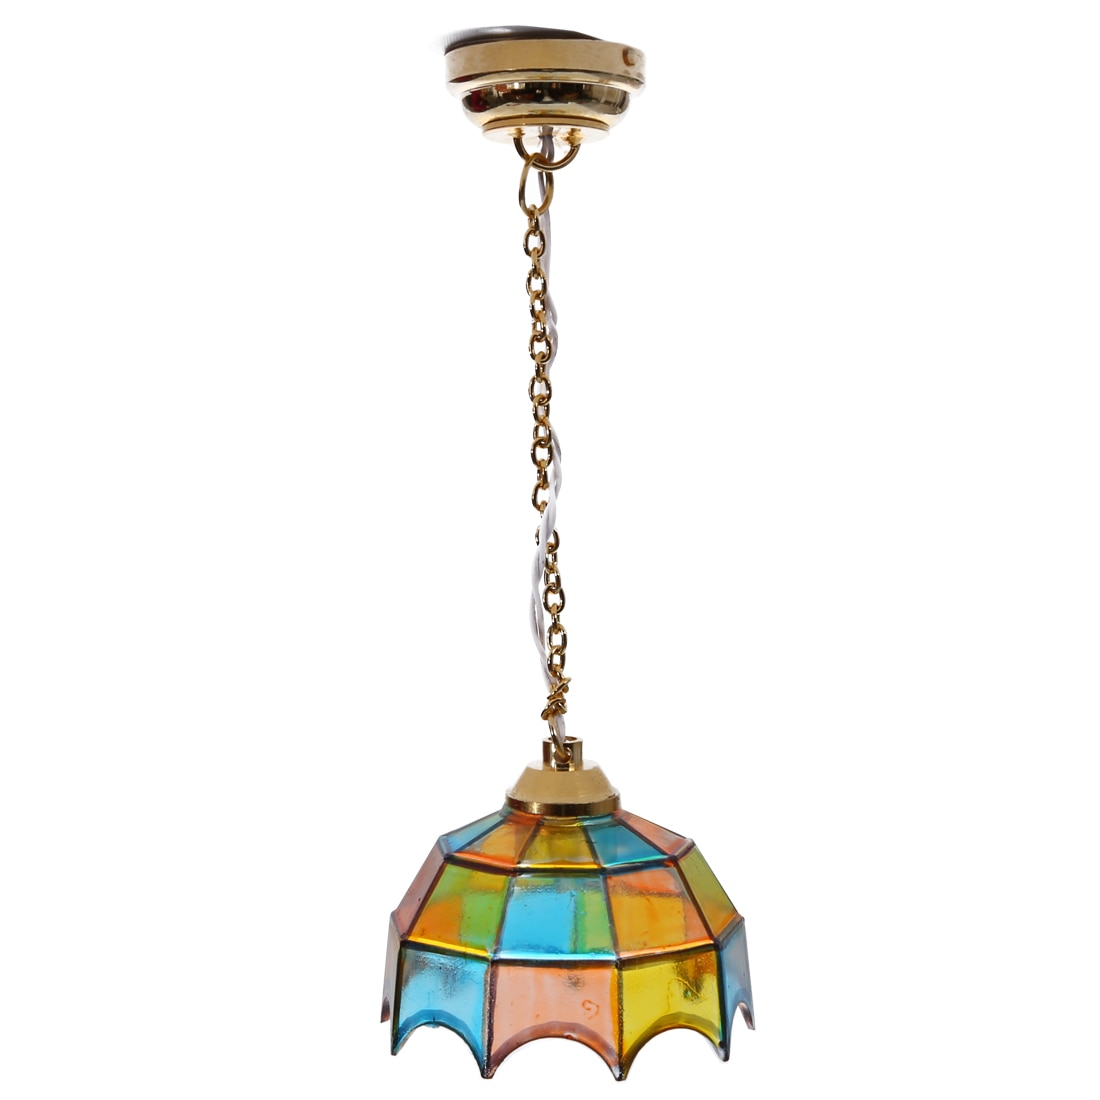 Abwe Metal 1:12 Dollhouse Miniature Plafondlamp Model Met Multicolor Paraplu Vorm Lampenkap